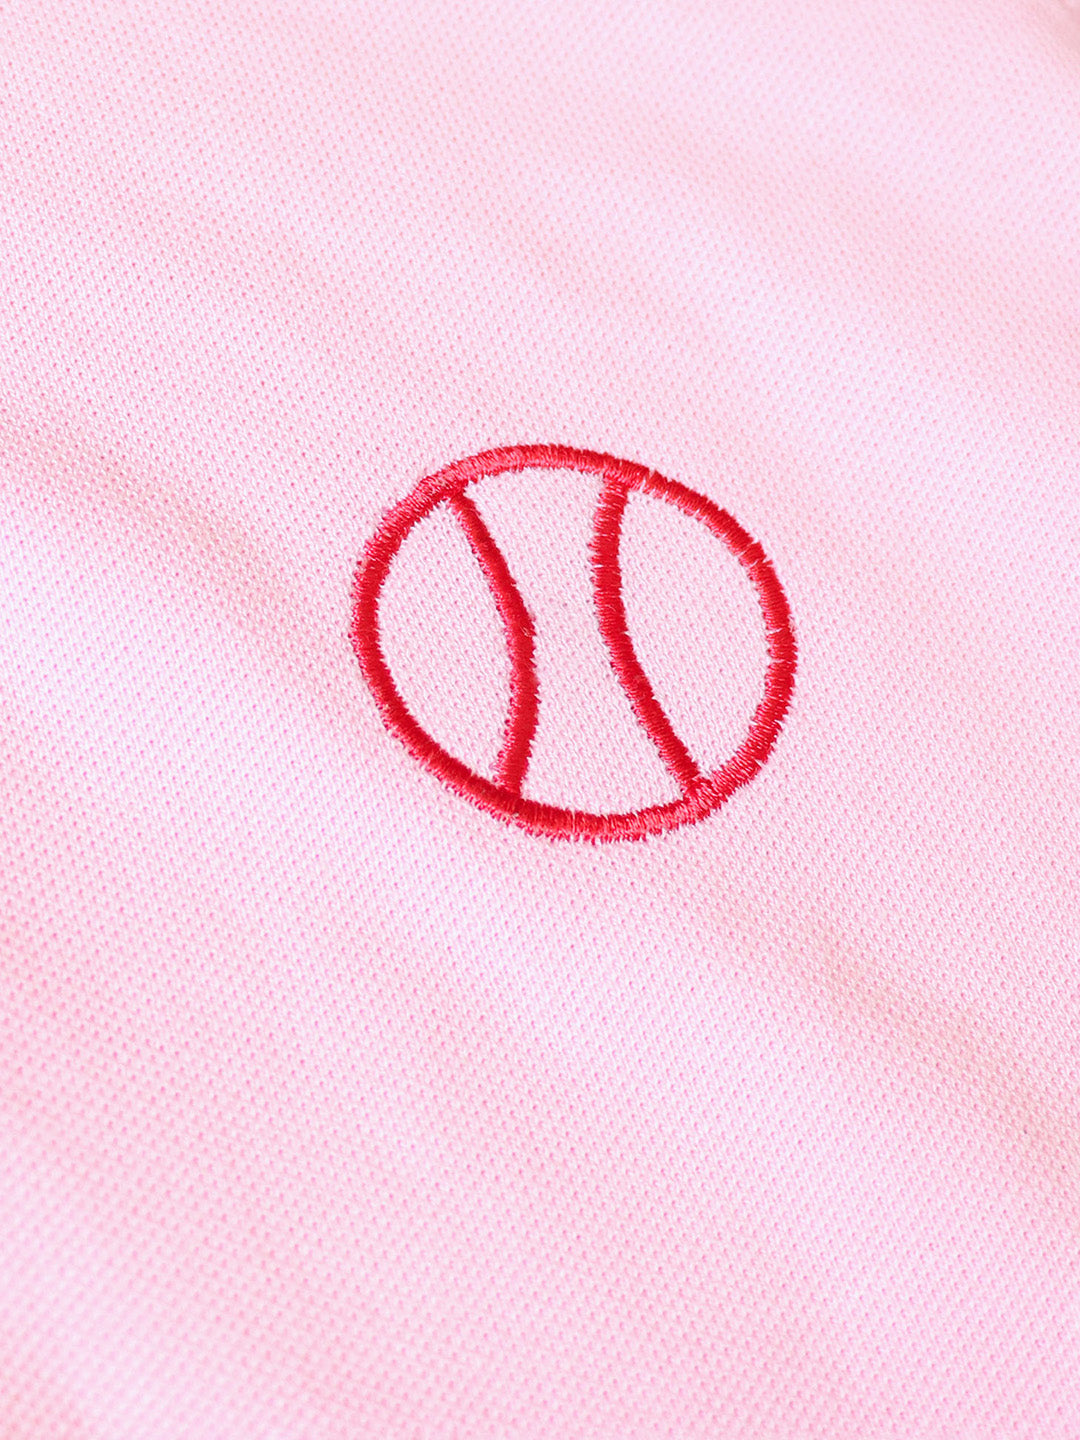 Ball Embroidered Pink Polo T-shirt